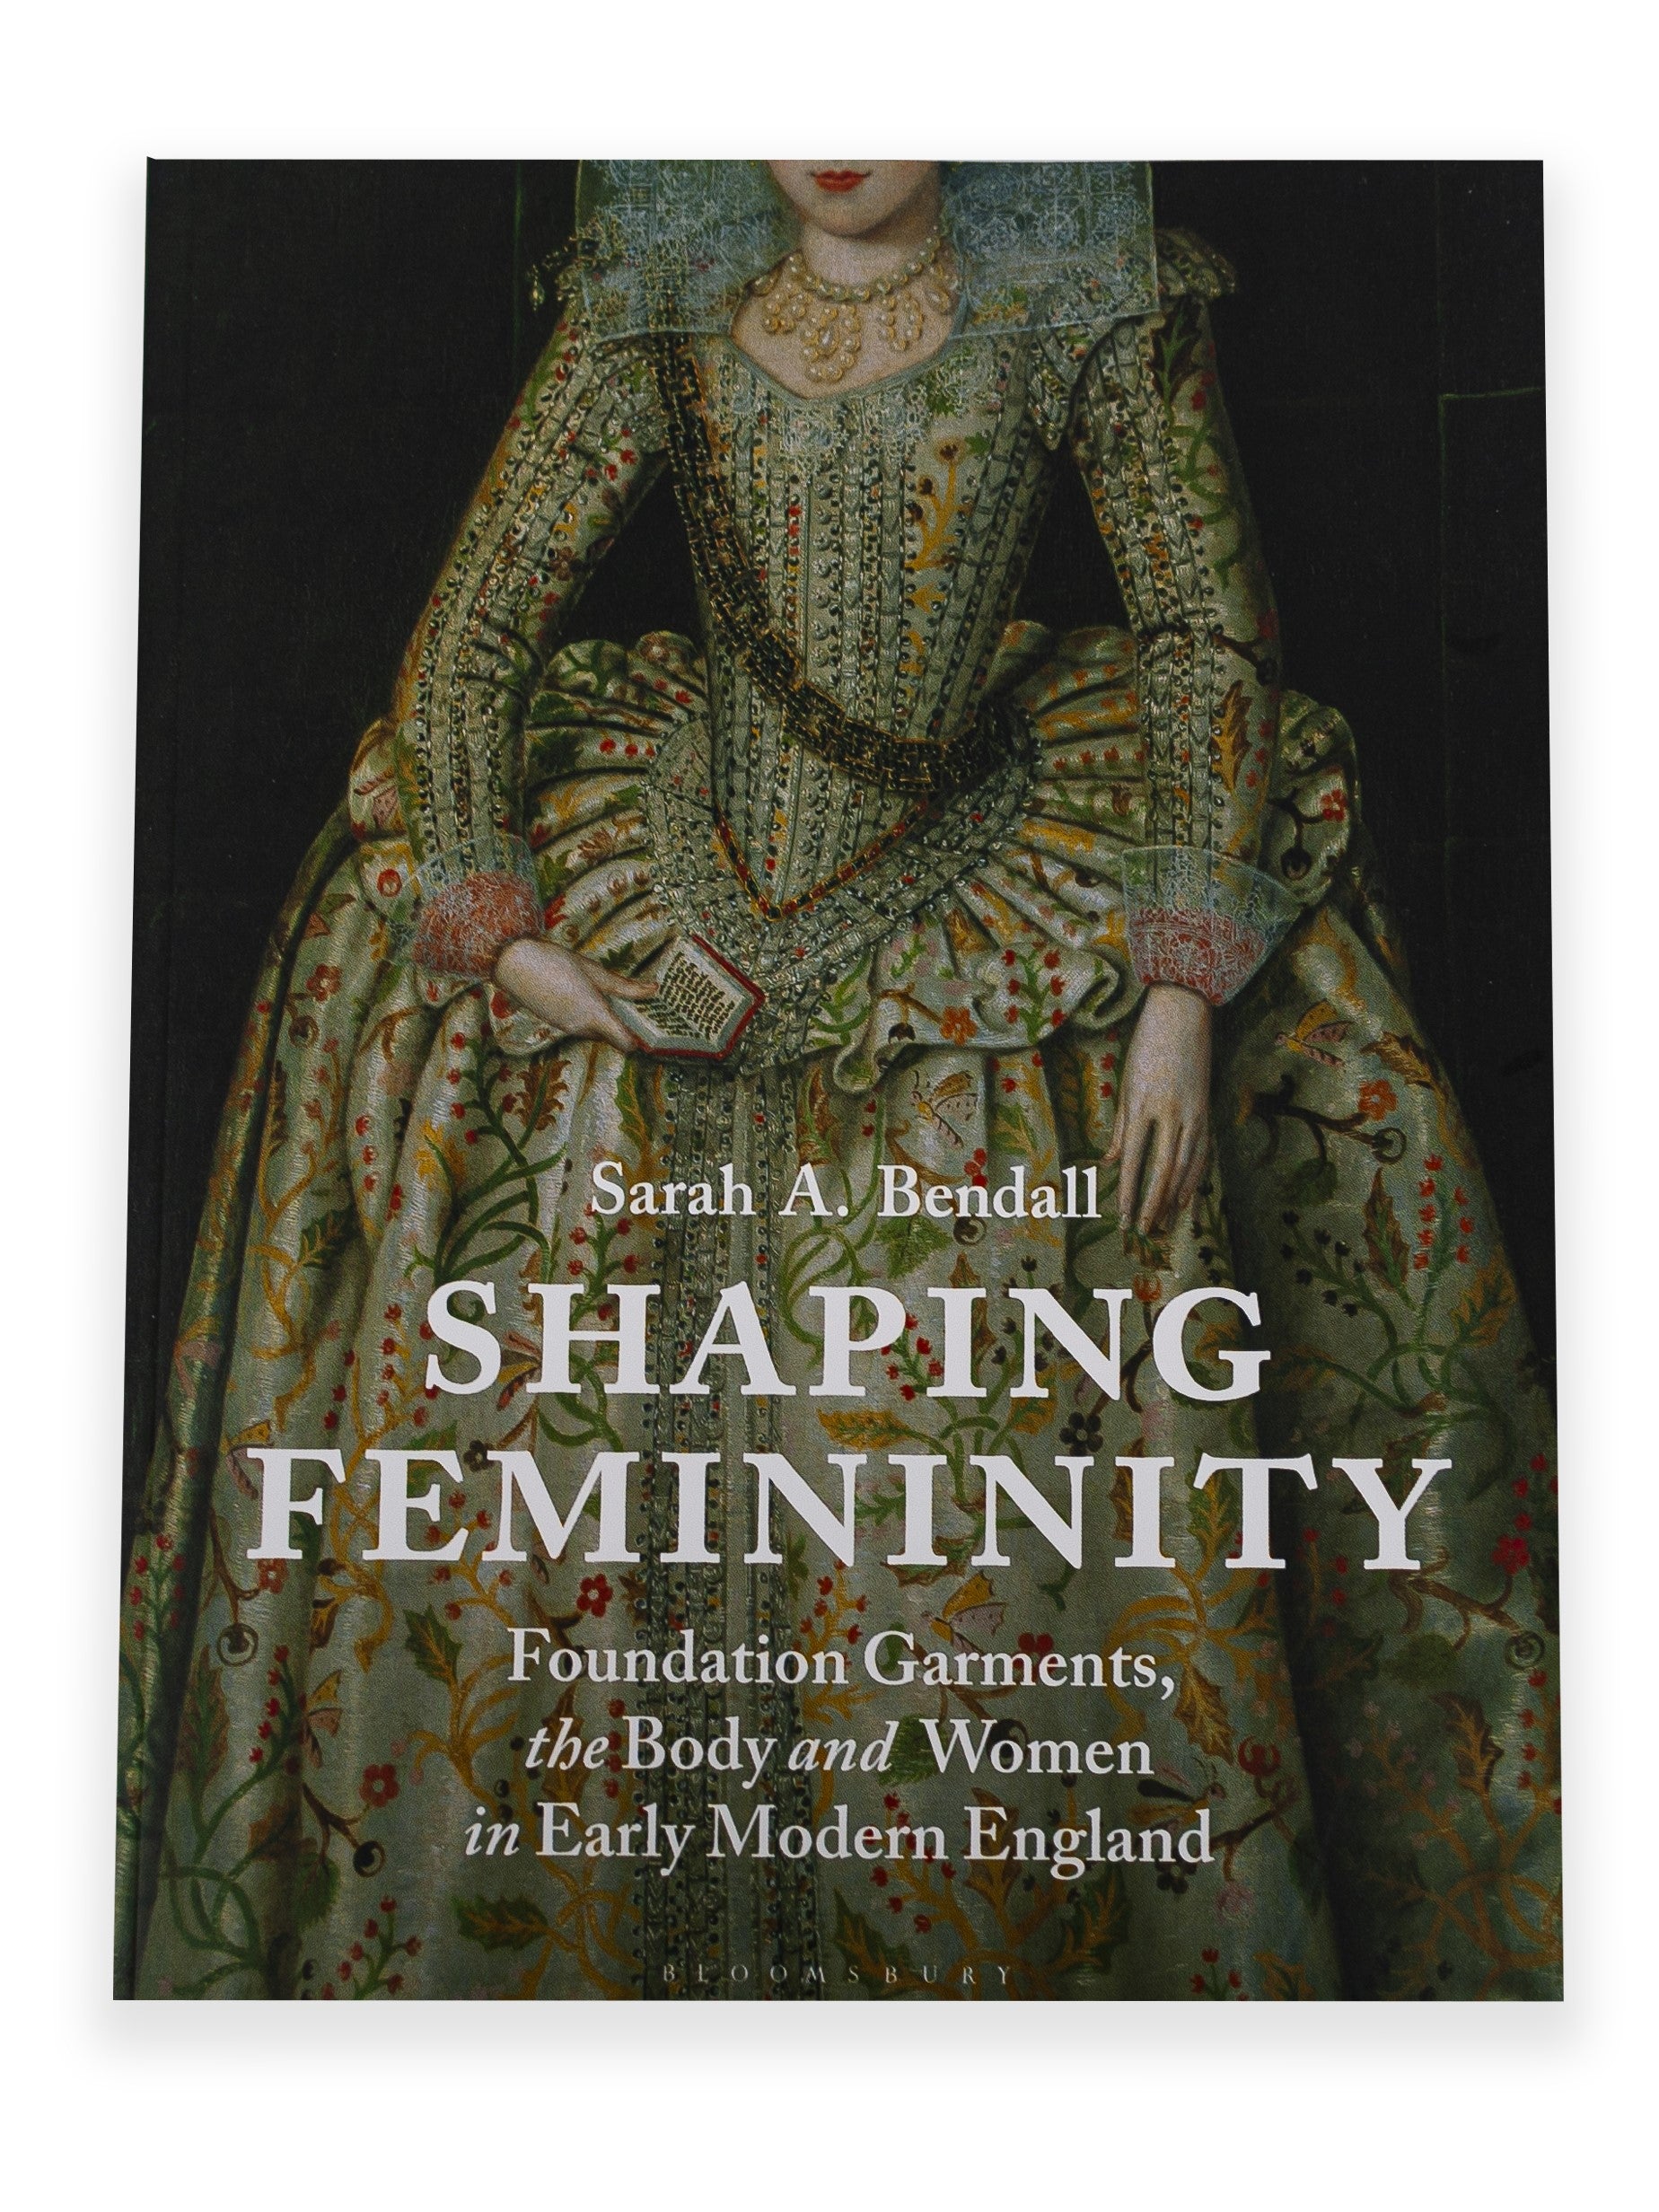 Sarah A. Bendall - Shaping Femininity – The Harley Gallery